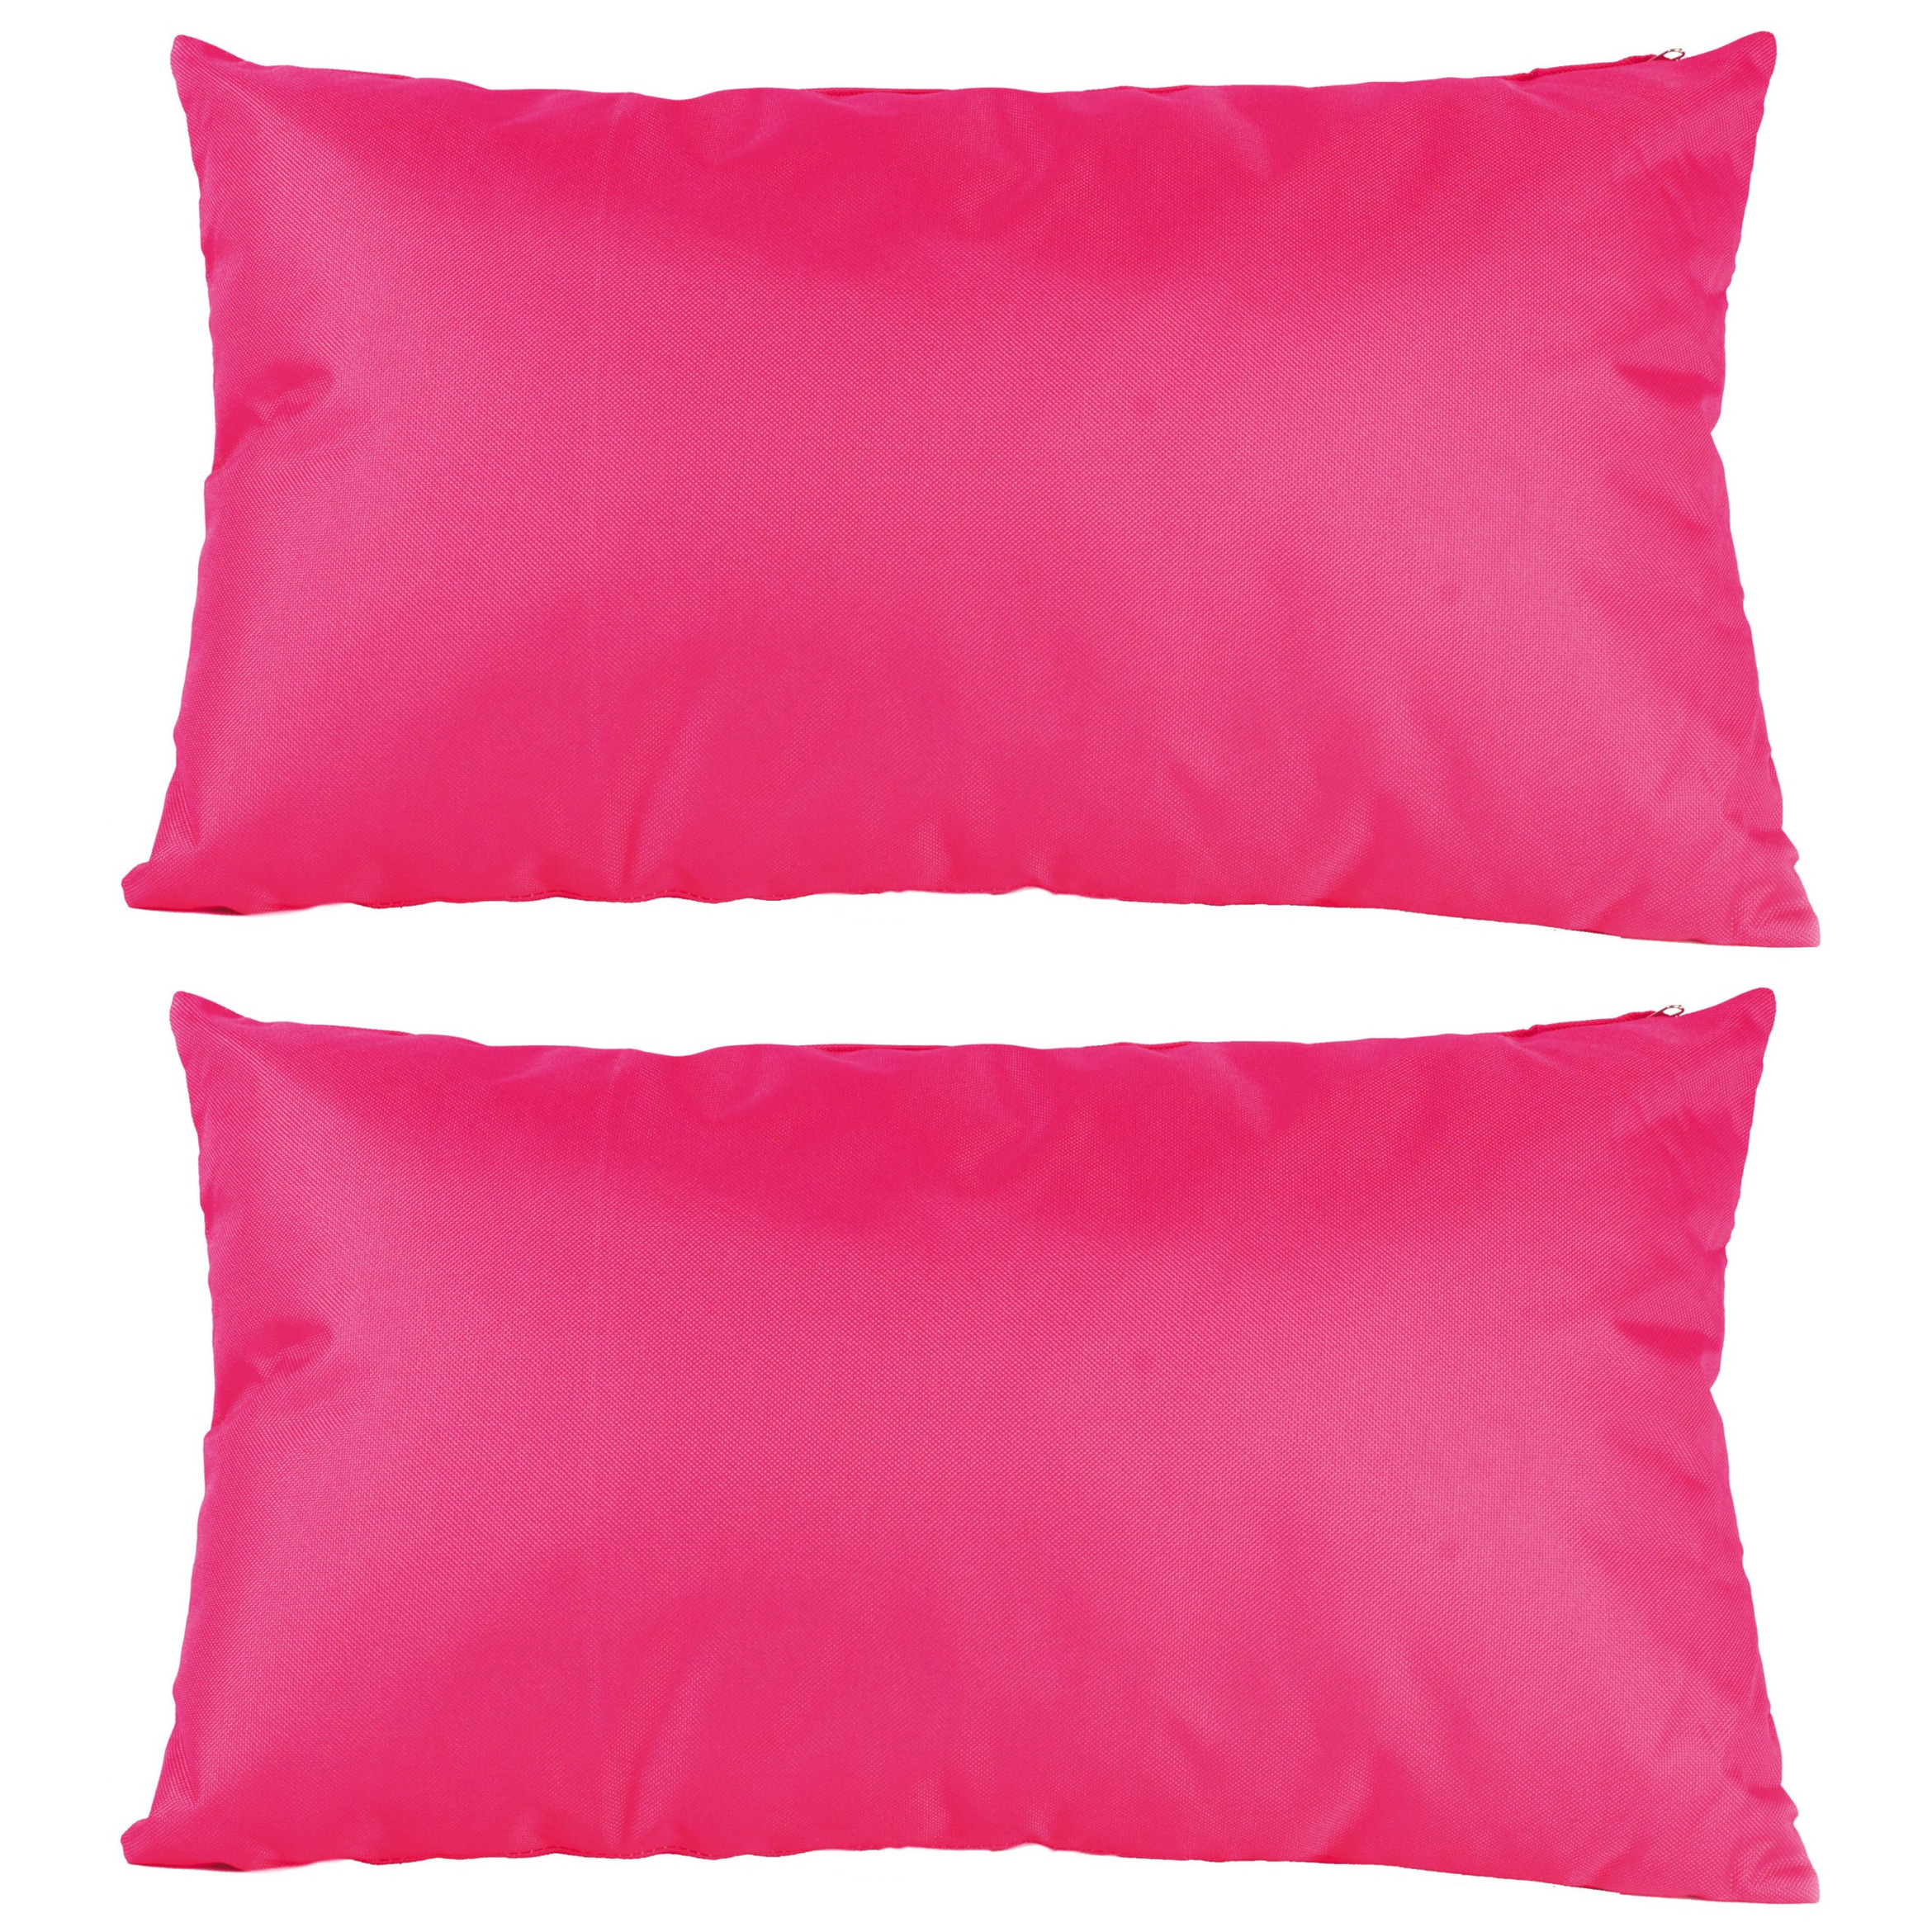 8x Bank-sier kussens voor binnen en buiten in de kleur fuchsia roze 30 x 50 cm